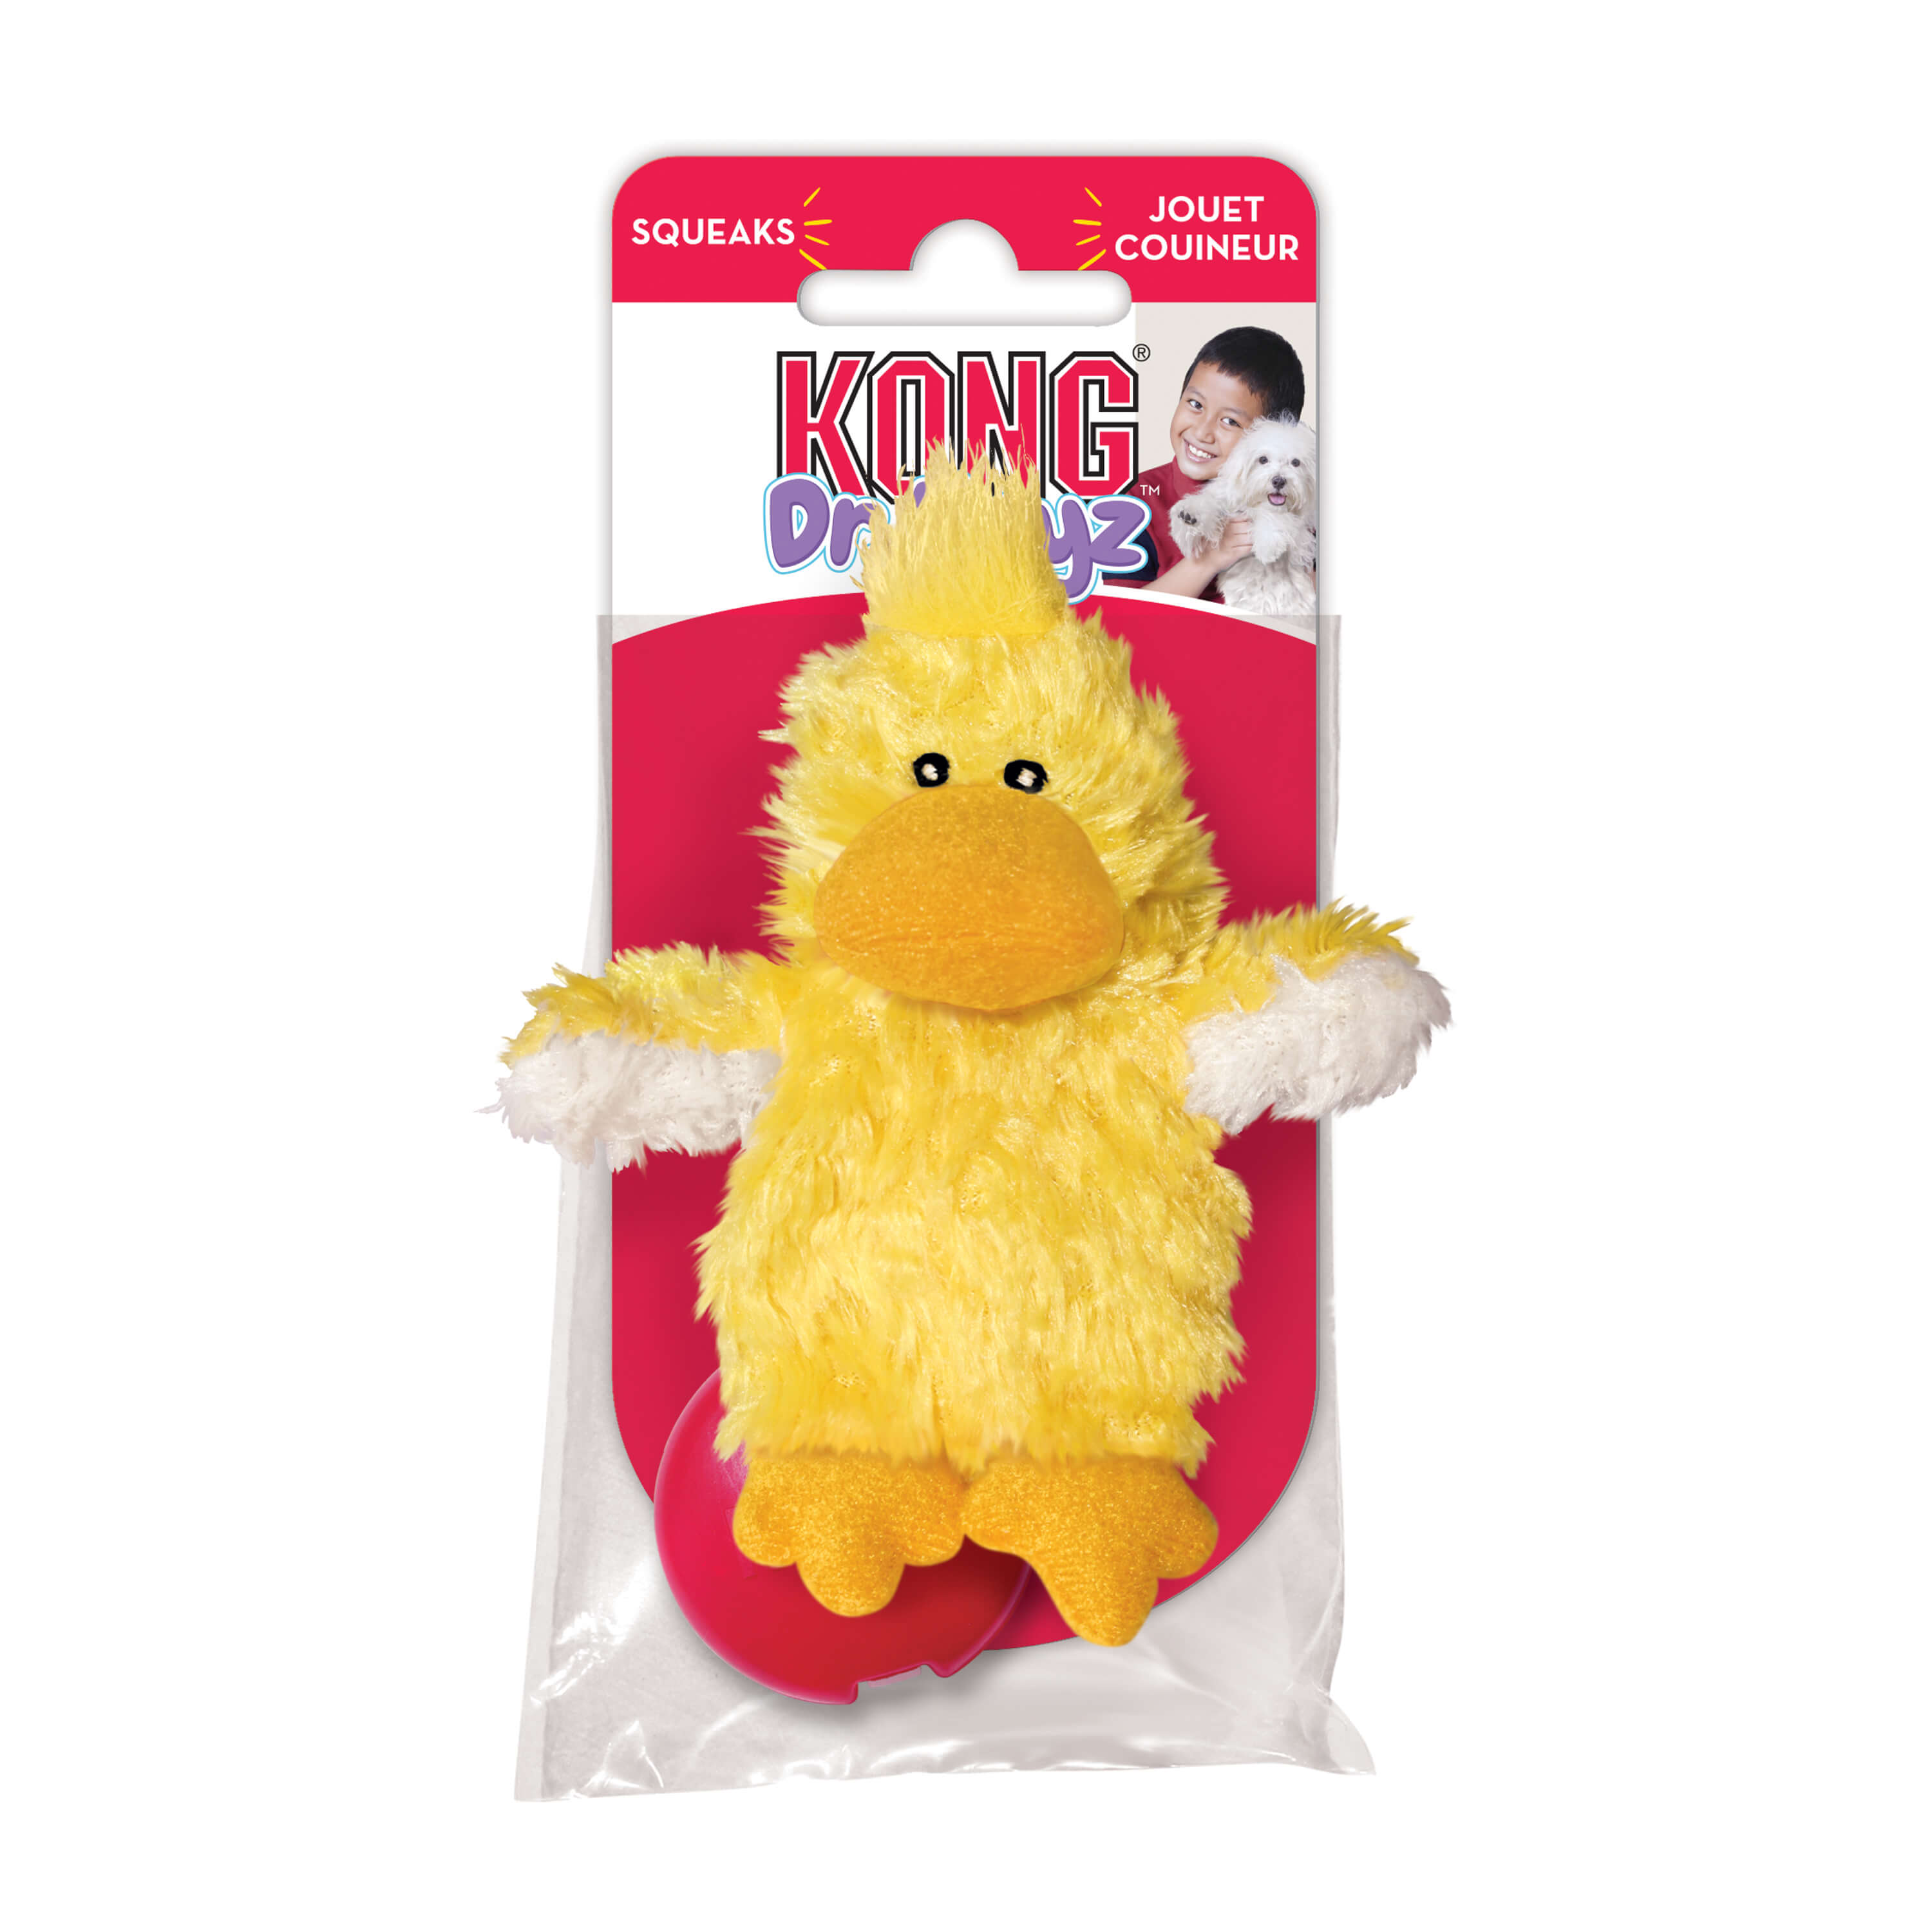 Kong dog toy - dr. noyz duck